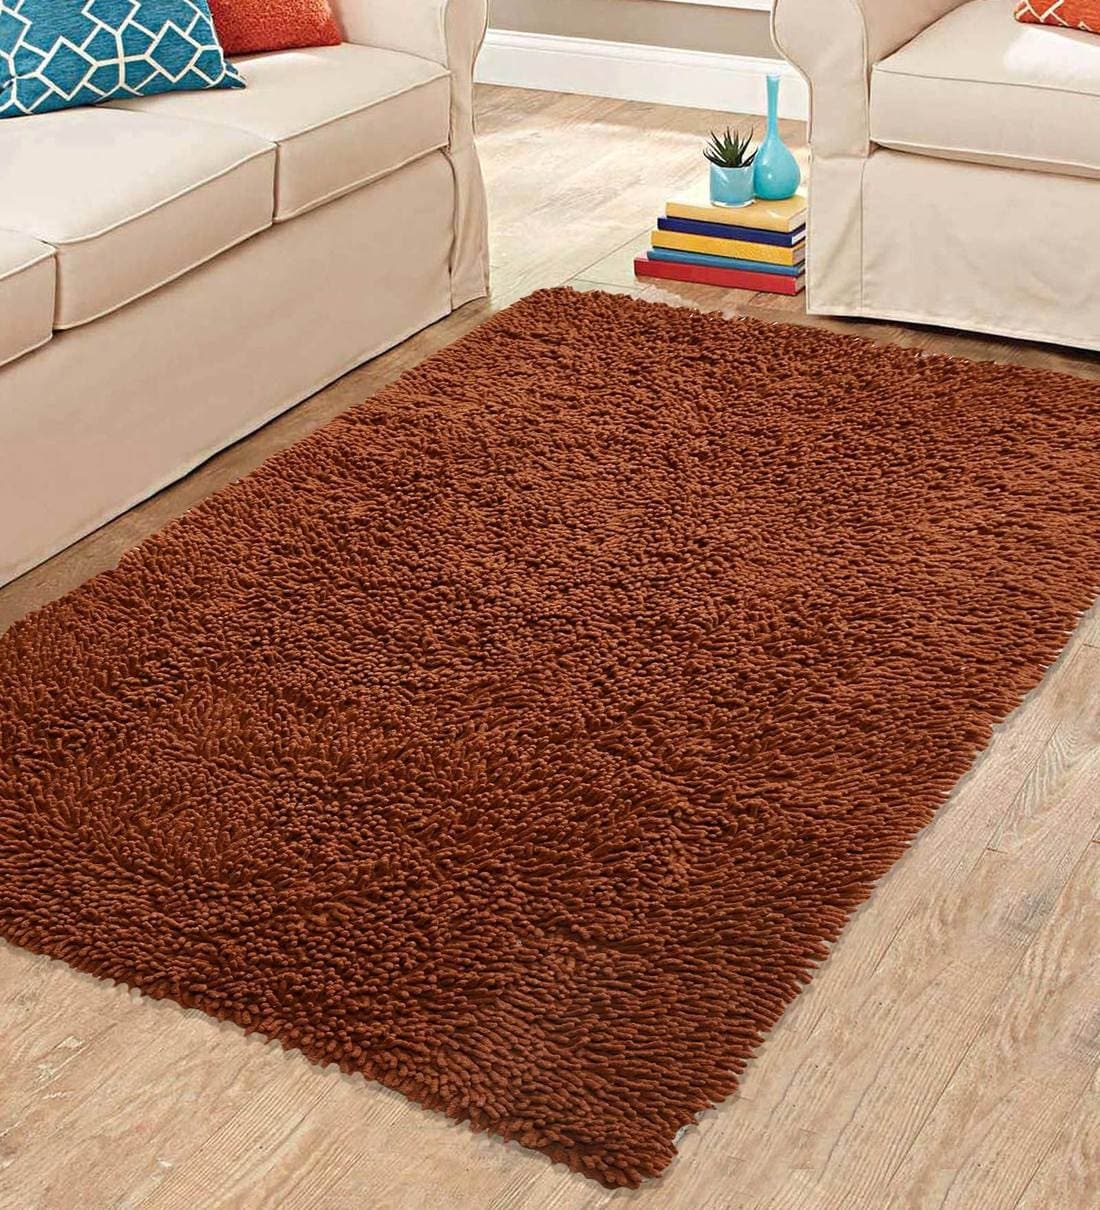 Why do you need good carpet padding?